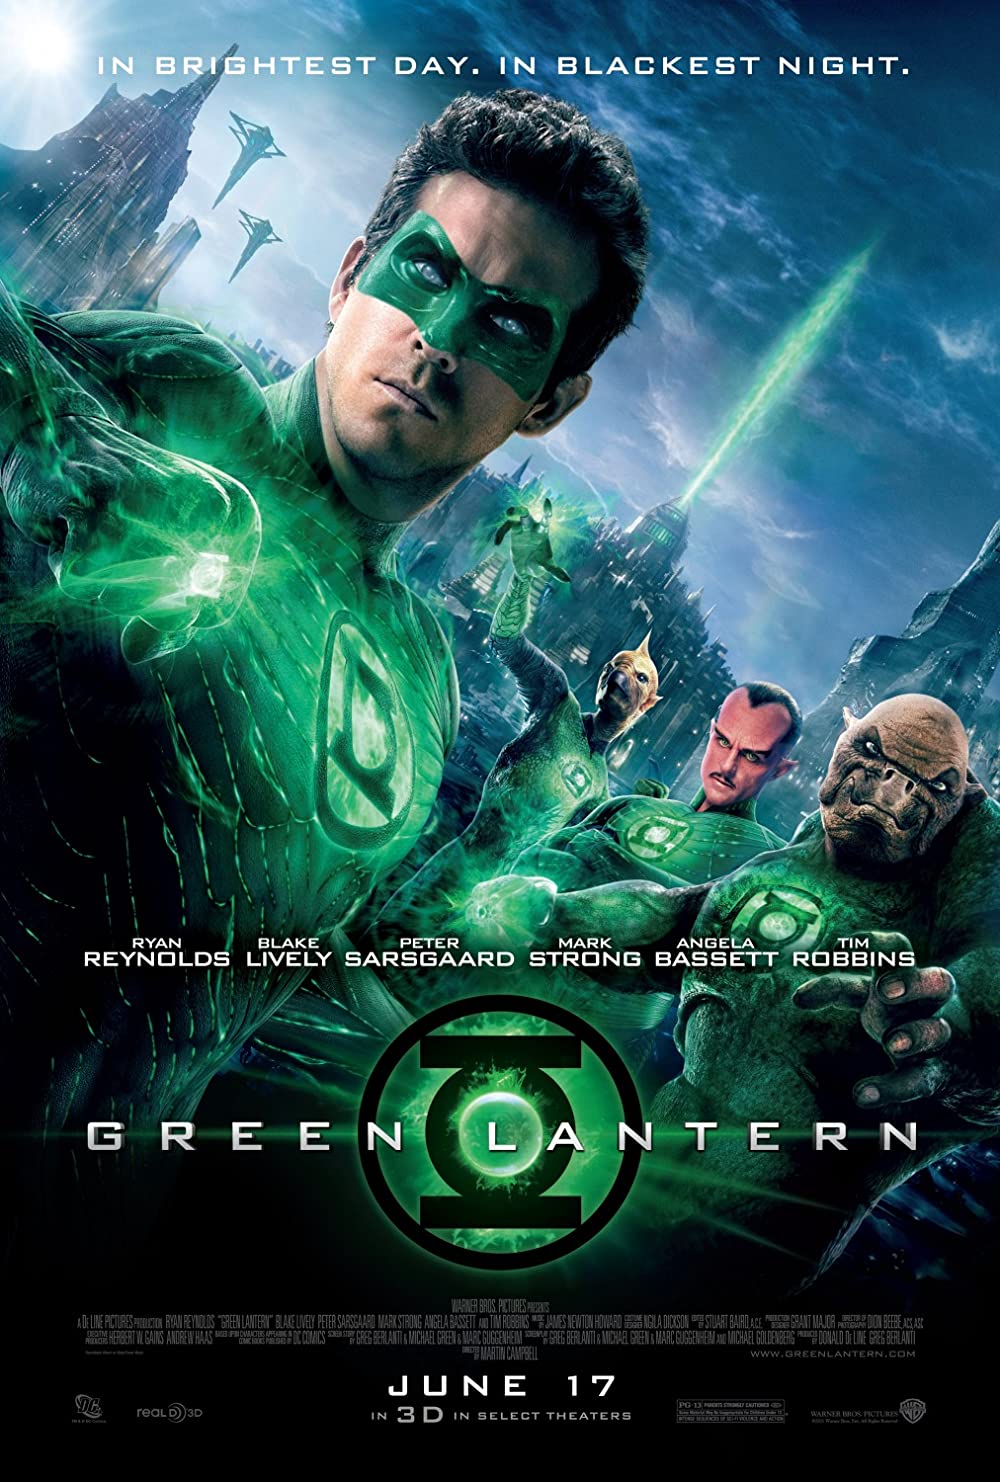 FULL MOVIE: Green Lantern (2011)